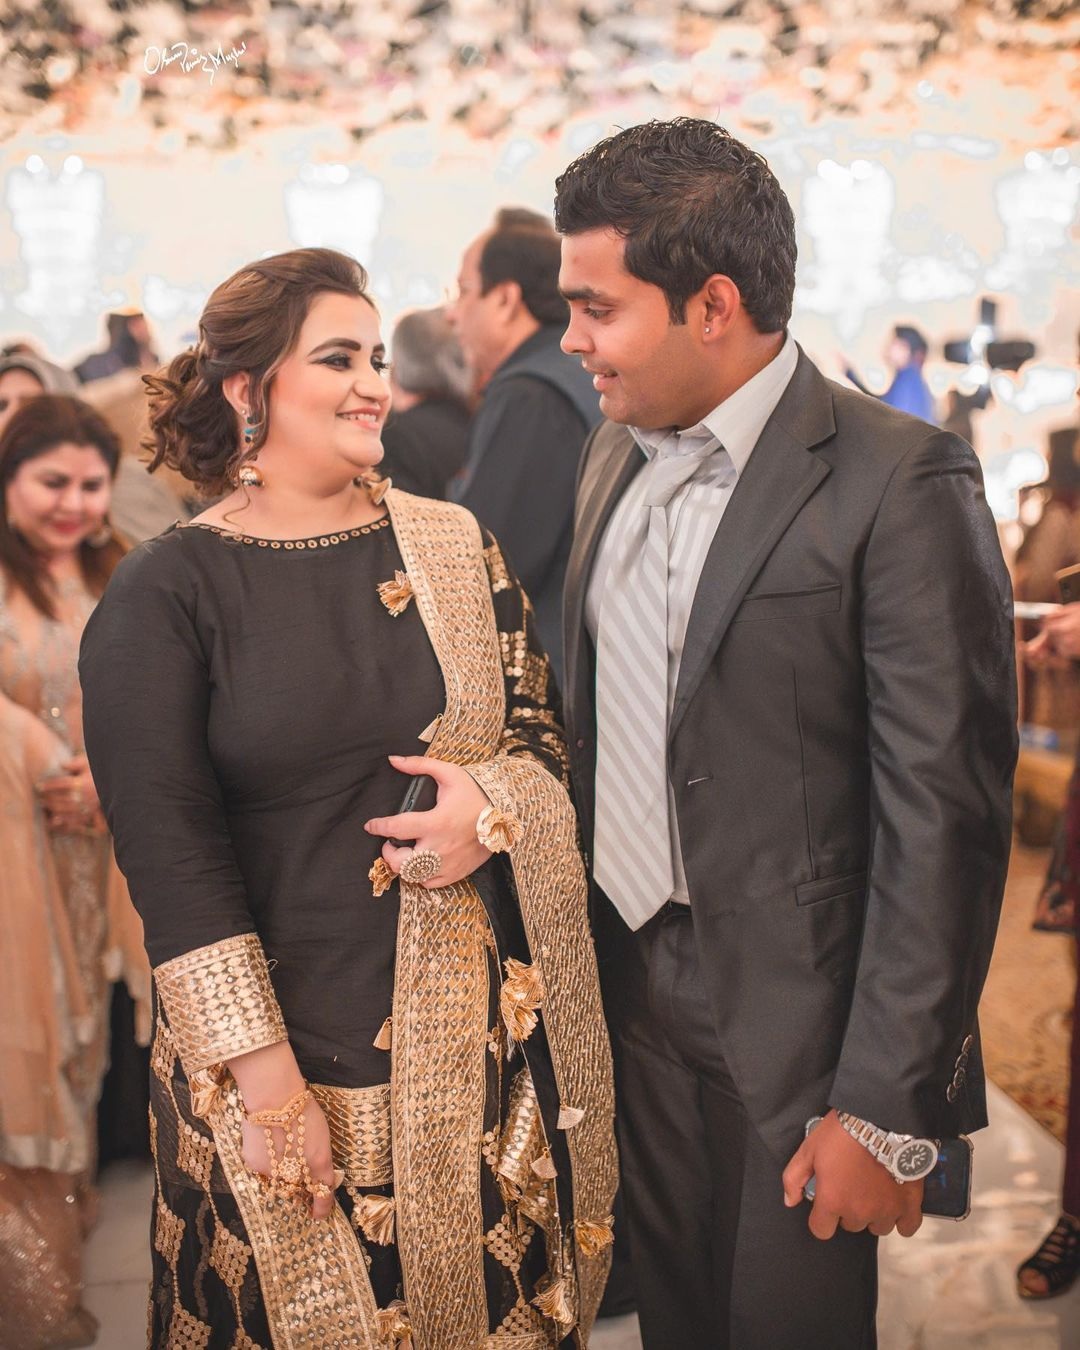 Inzamam-ul-haq Daughter Wedding